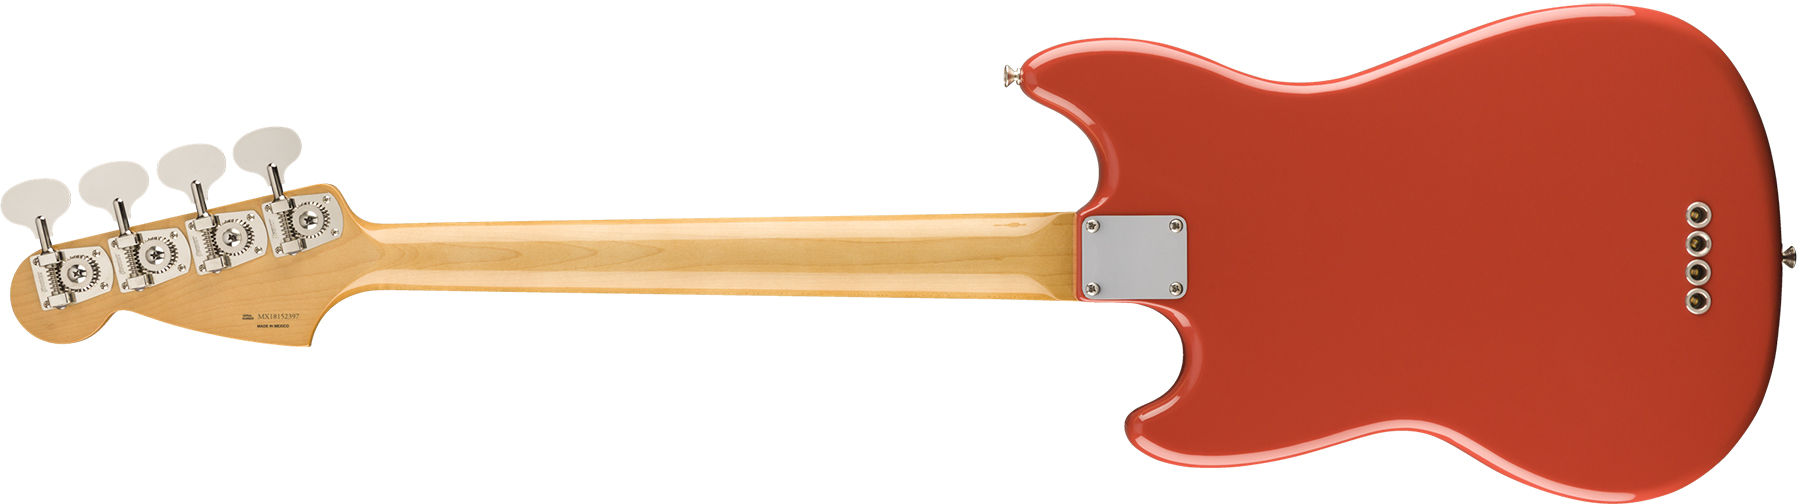 Fender Mustang Bass 60s Vintera Vintage Mex Pf - Fiesta Red - Short scale elektrische bas - Variation 1